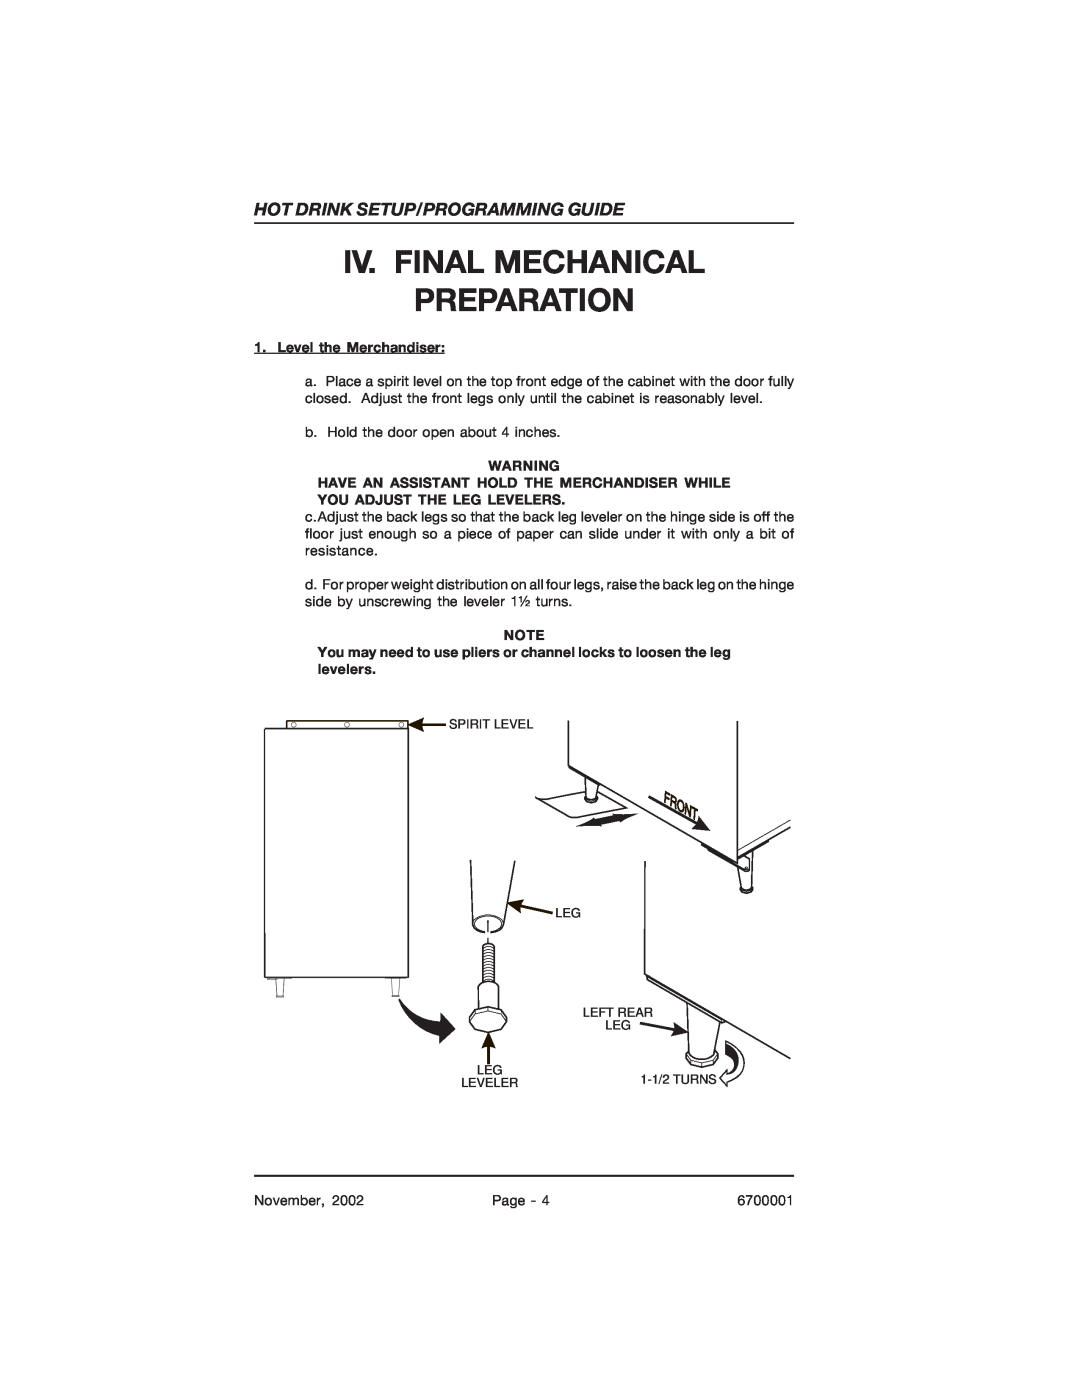 Crane Merchandising Systems 670, 678 manual Iv. Final Mechanical Preparation, Hot Drink Setup/Programming Guide 